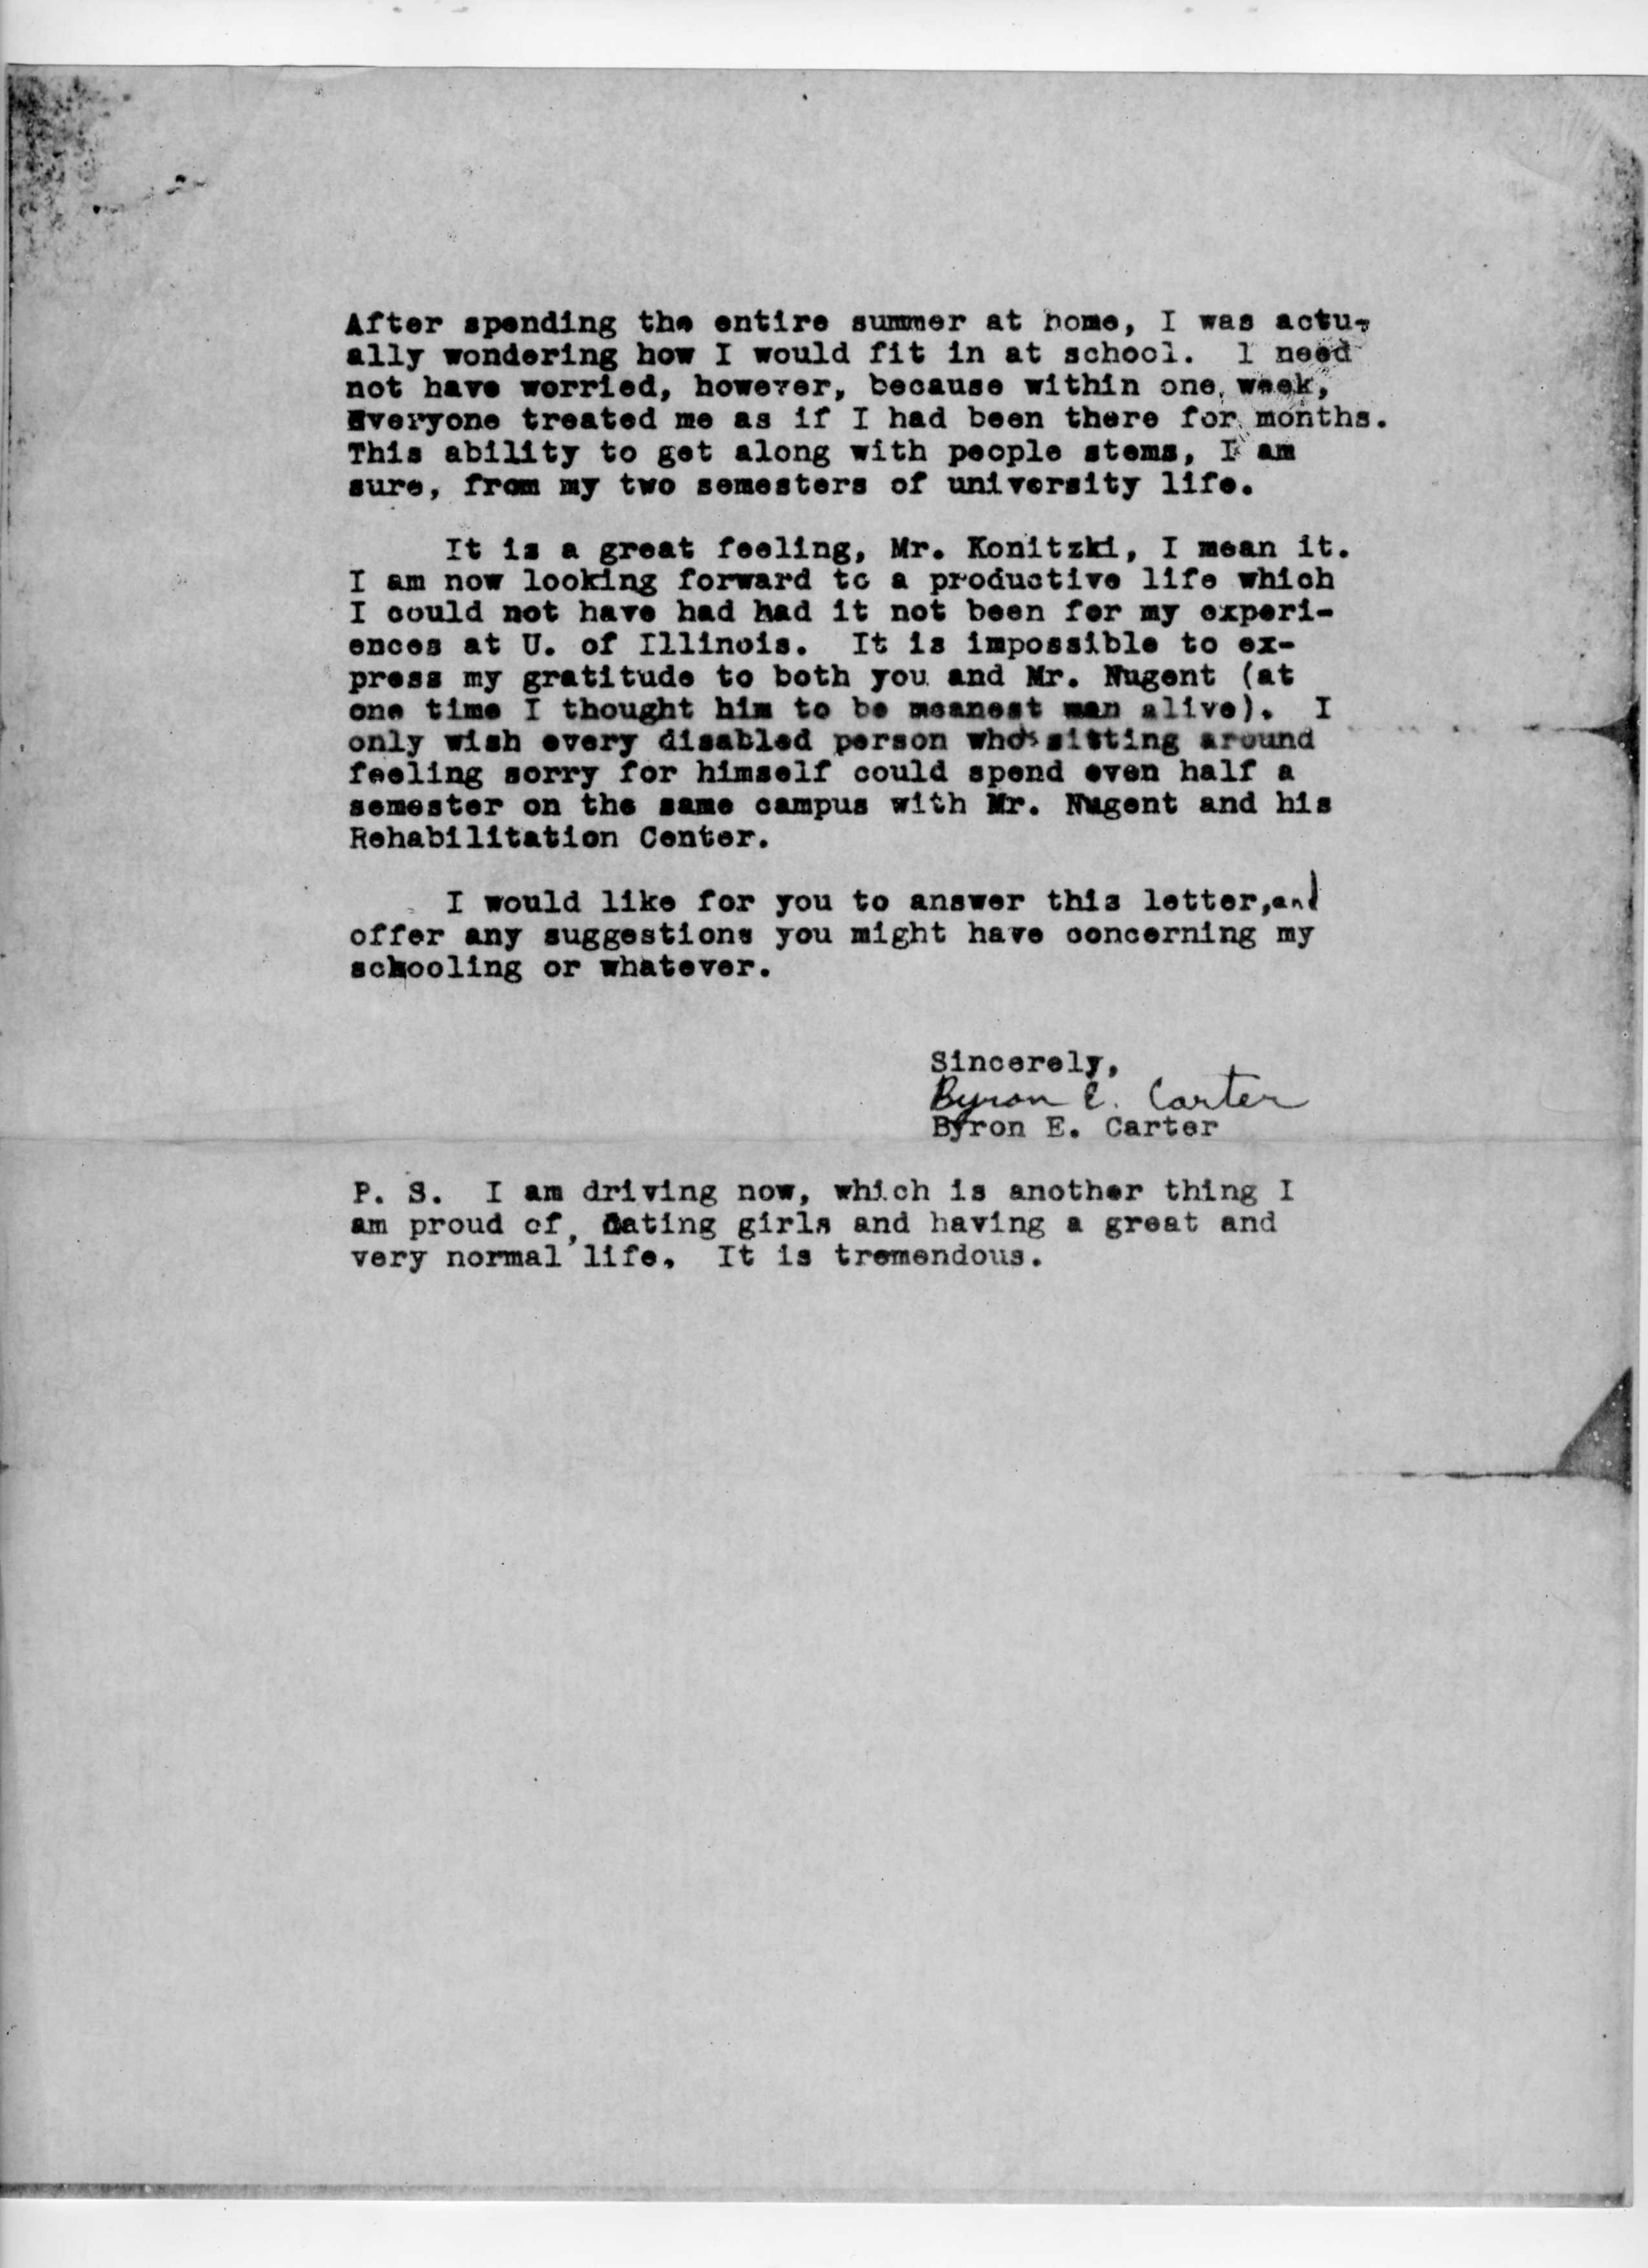 Byron E. Carter Correspondence, February 14, 1964, Page 2